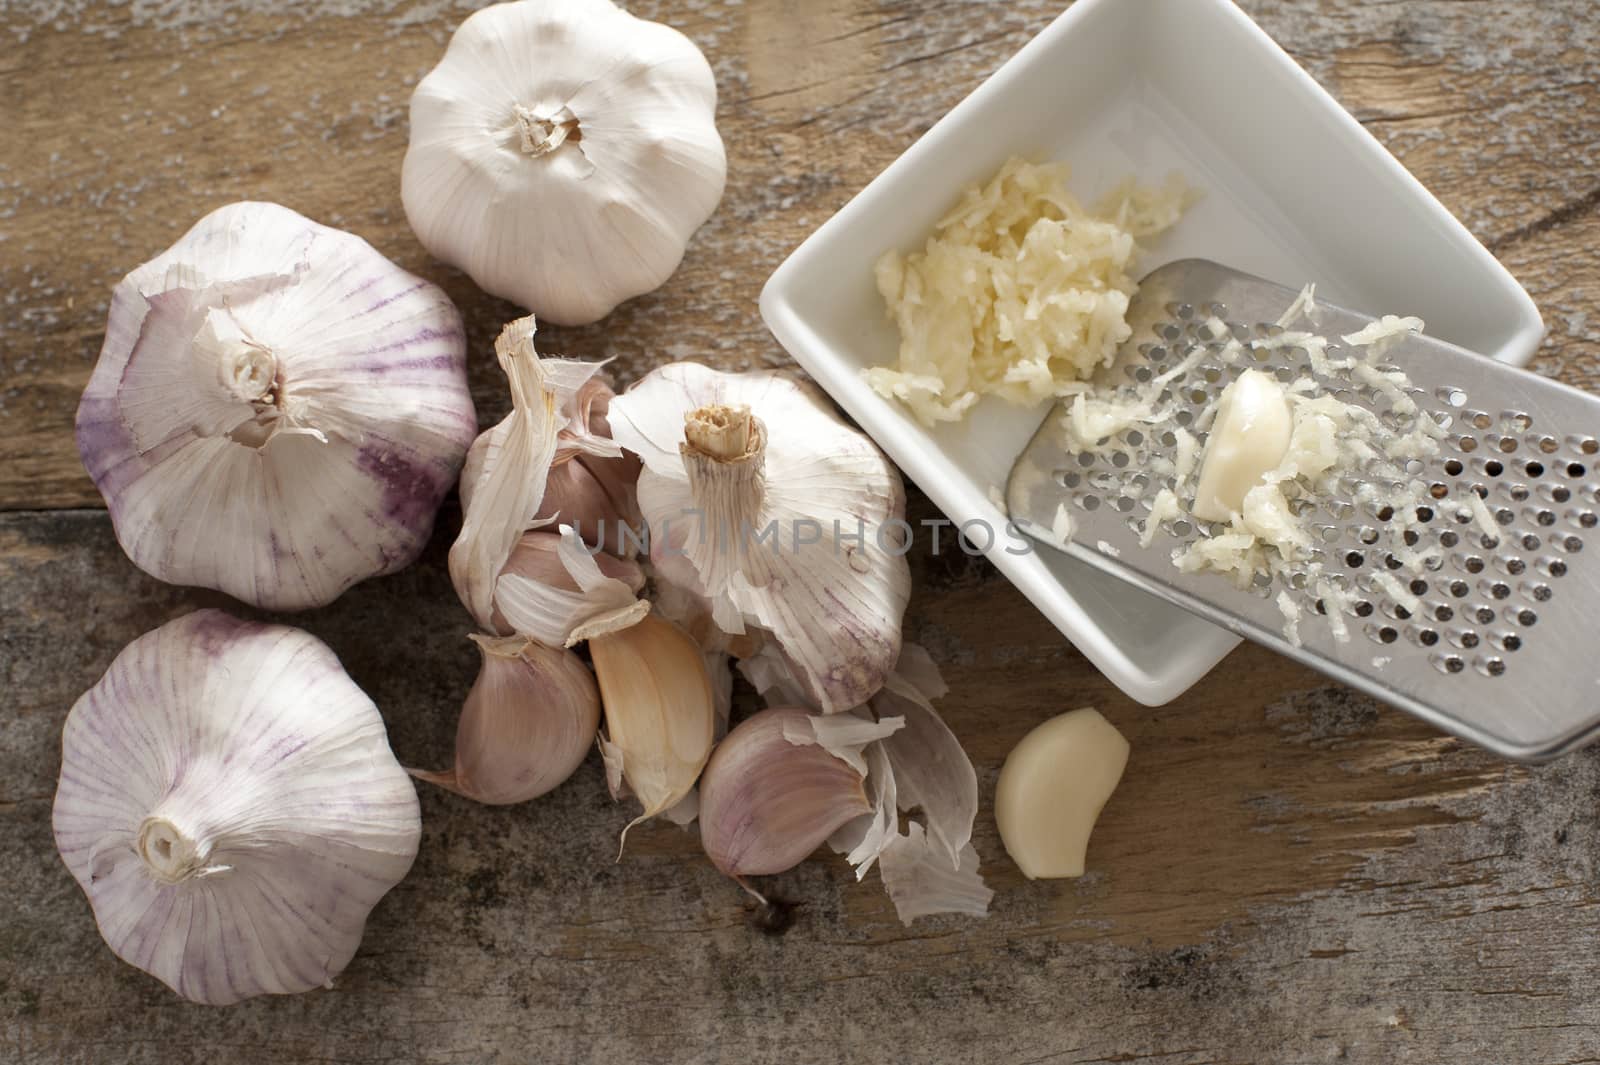 Four garlic bulbs beside shredded cloves by stockarch